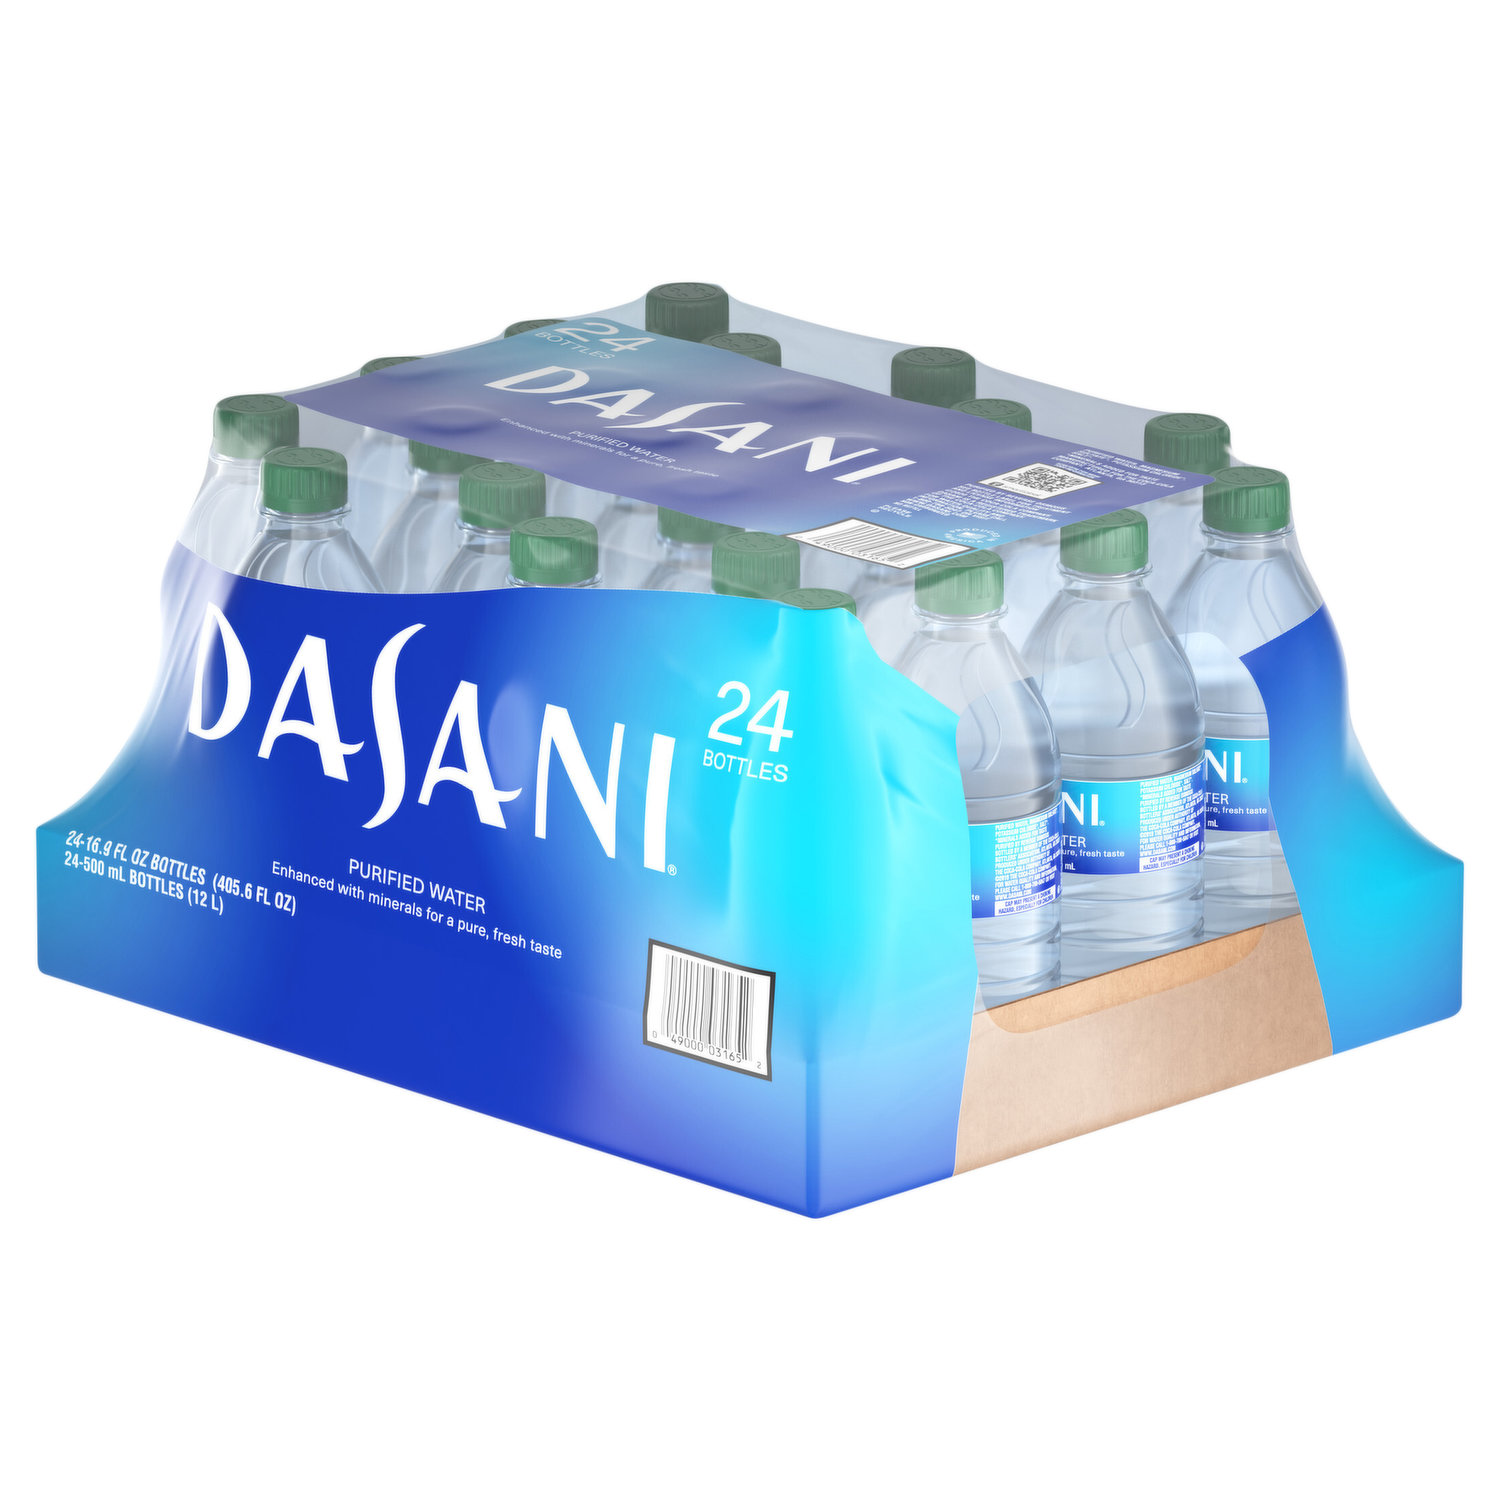 DASANI Purified Water Bottles Enhanced with Minerals, 16.9 fl oz